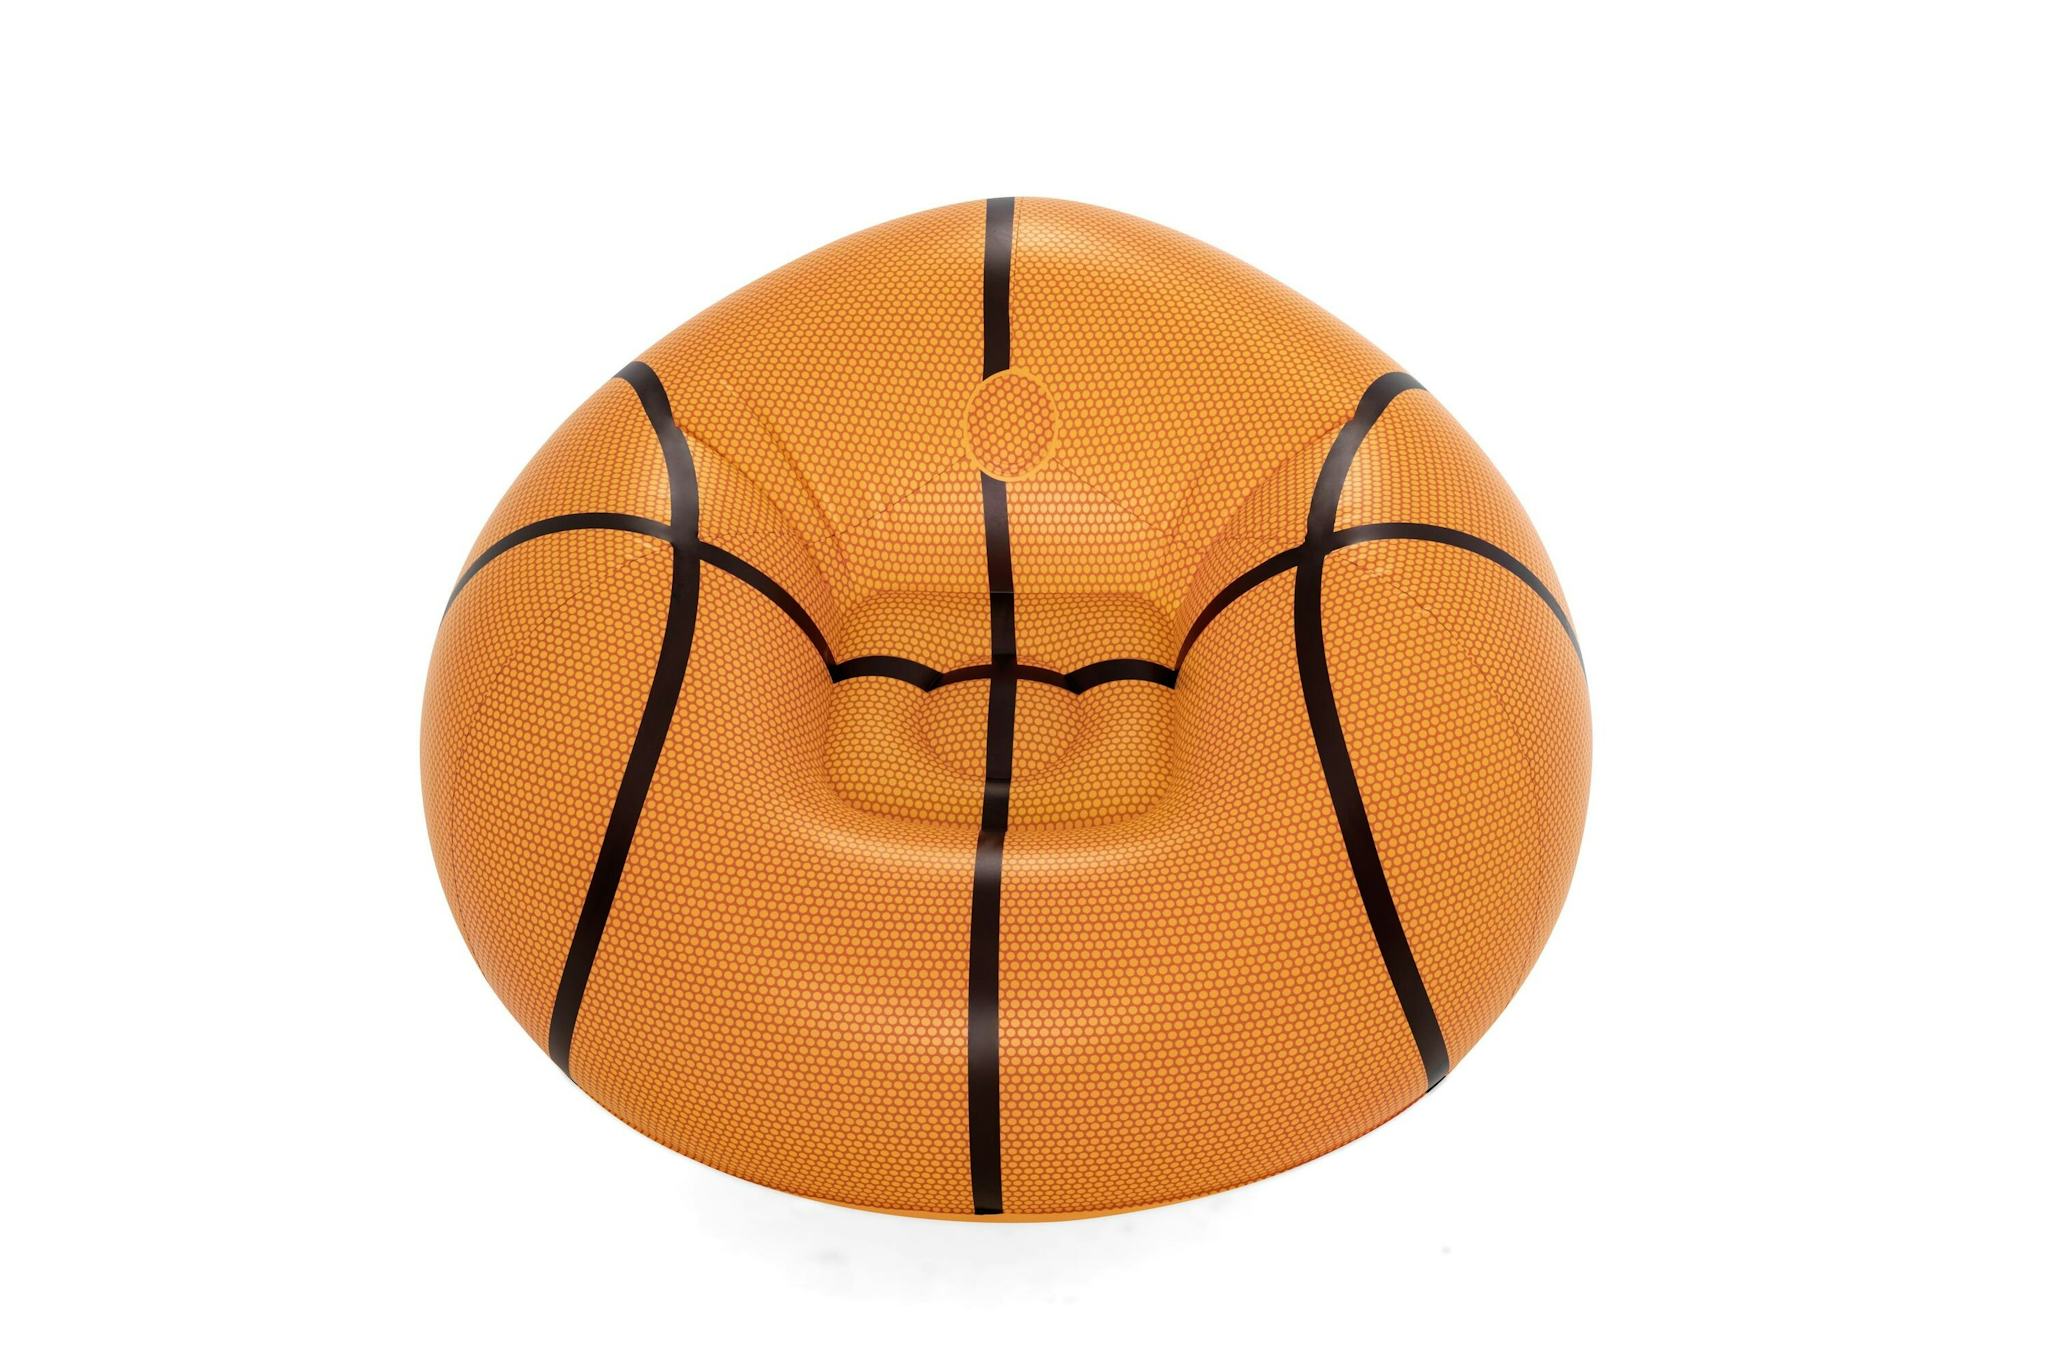 Giochi gonfiabili per bambini Poltrona pouf gonfiabile Basketball Bestway 16